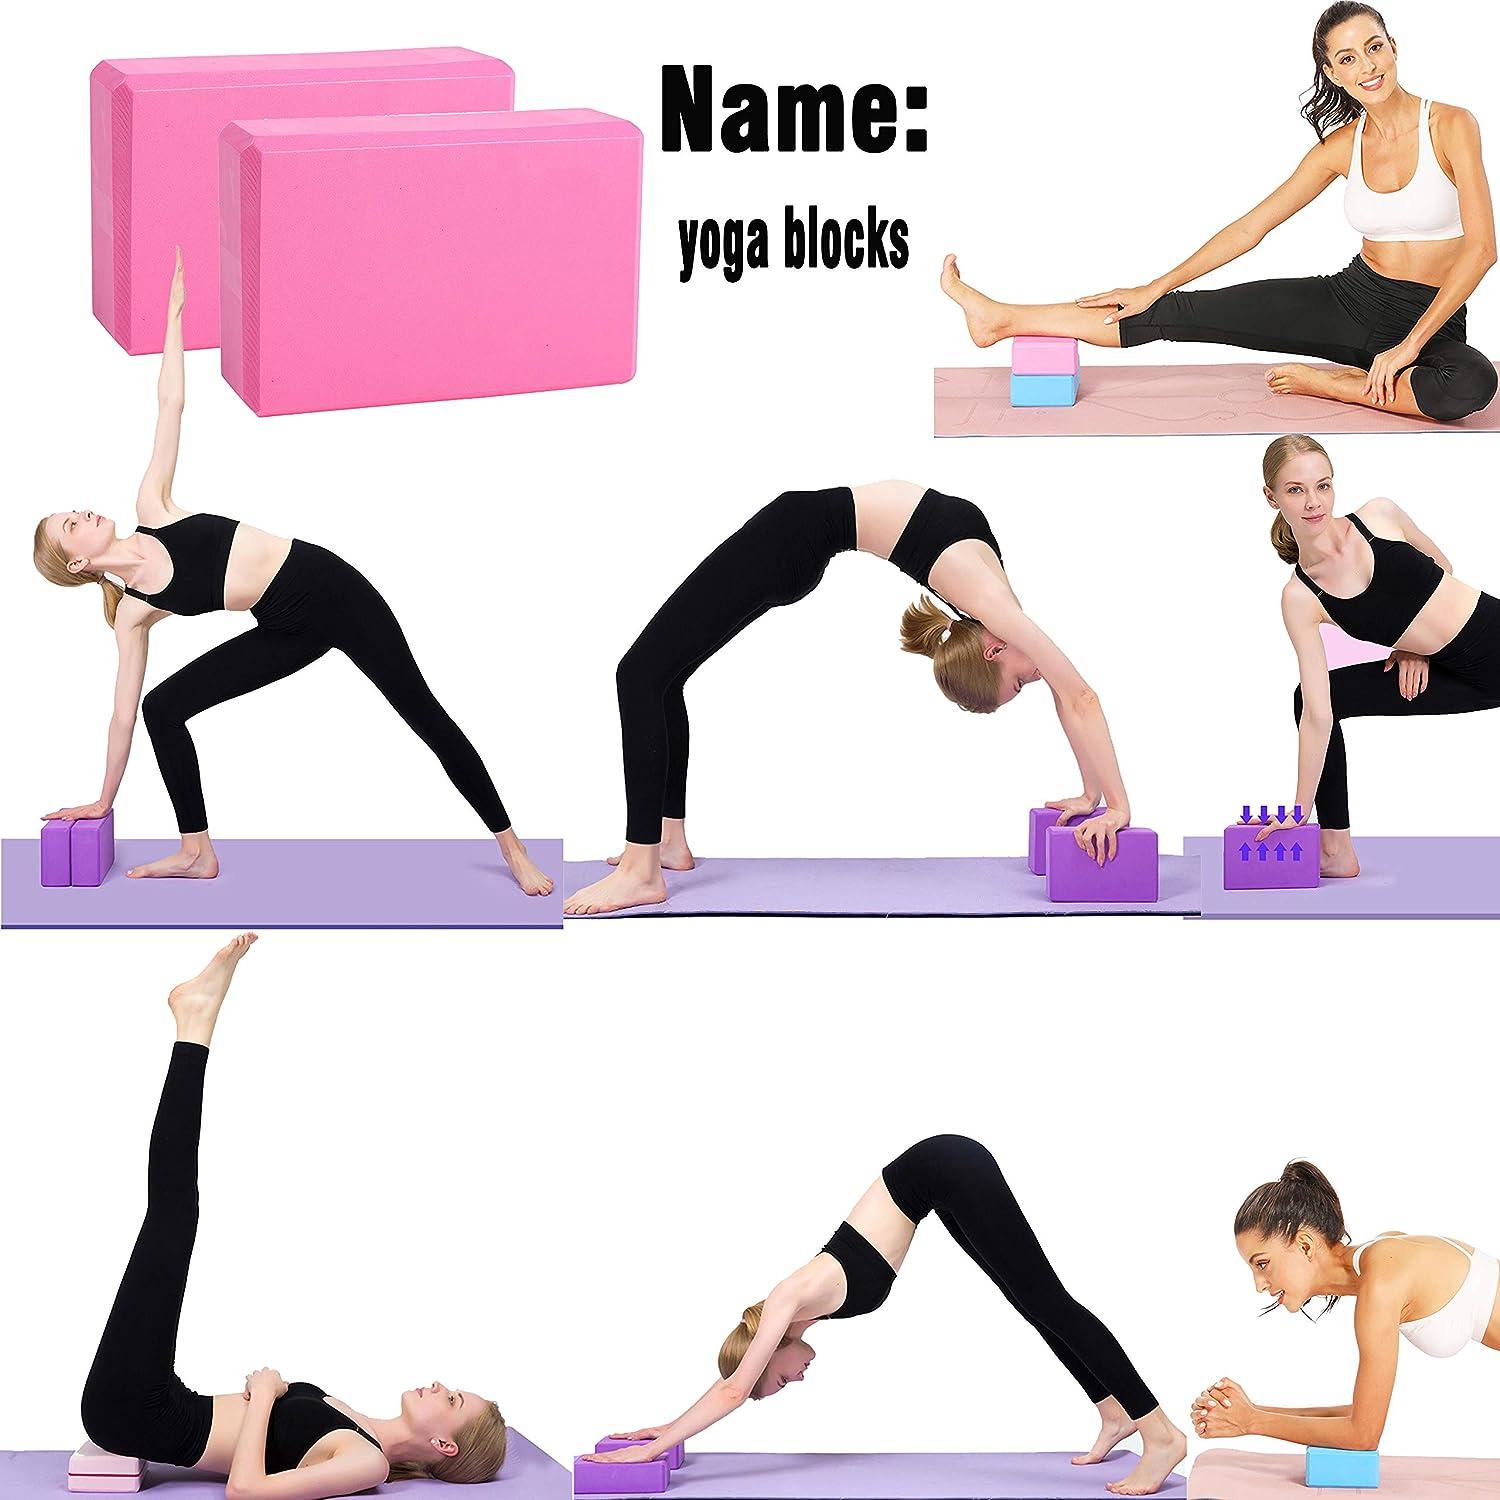 Yogwise - Yoga Classes & Yoga Accessories Online Store